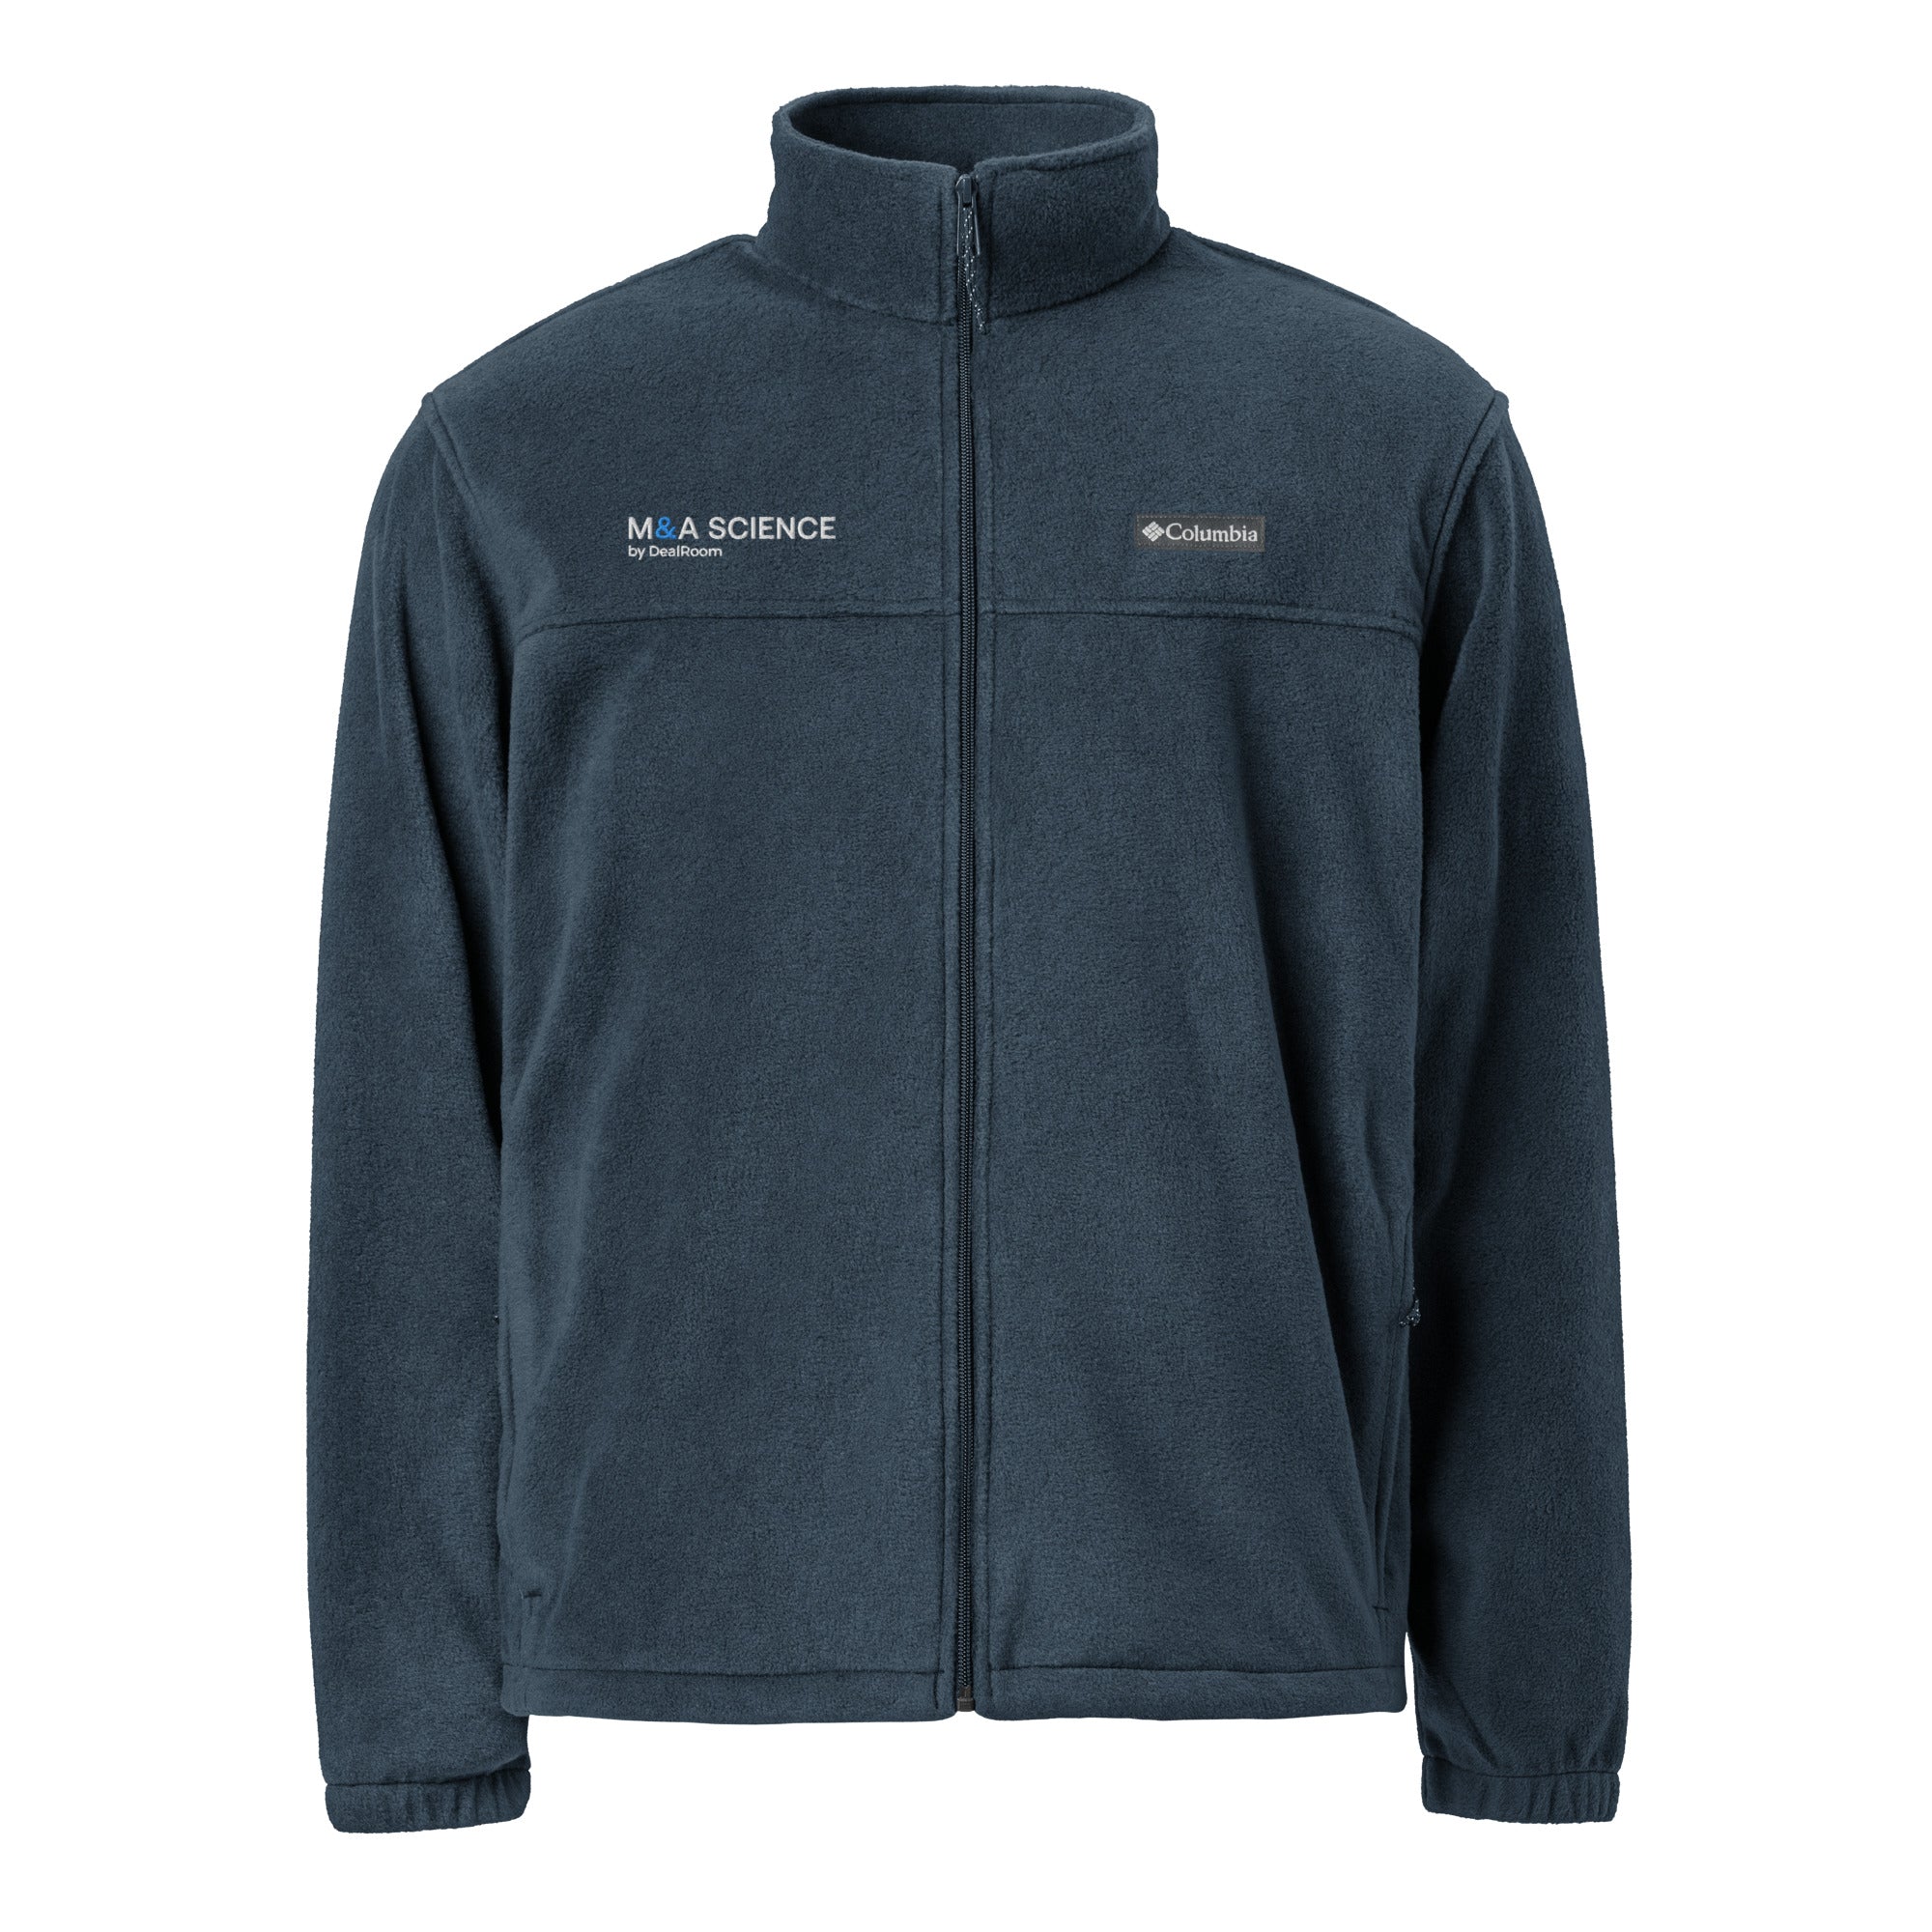 M&A Science Unisex Columbia fleece jacket